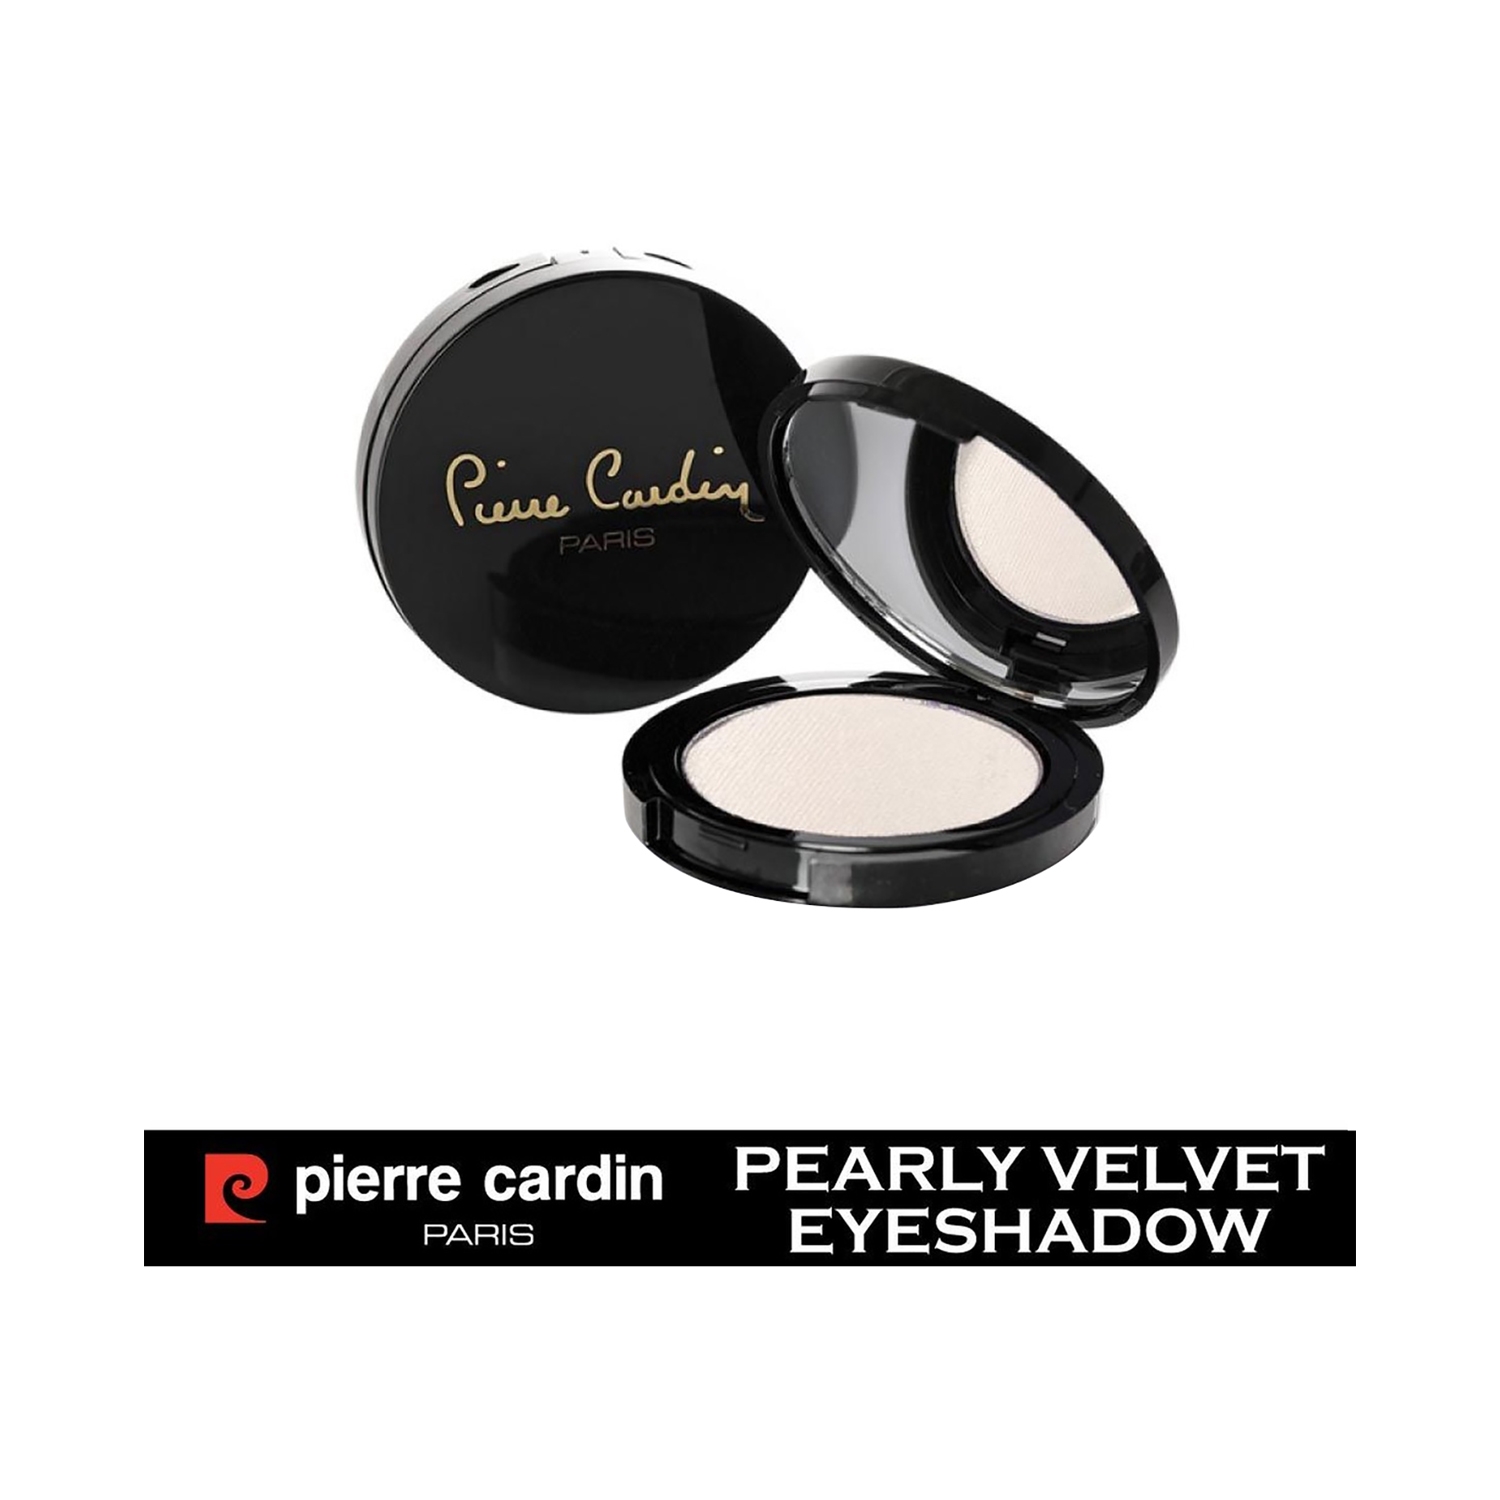 Pierre Cardin Paris Pearly Velvet Eye Shadow - 970 Marshmallow (4g)